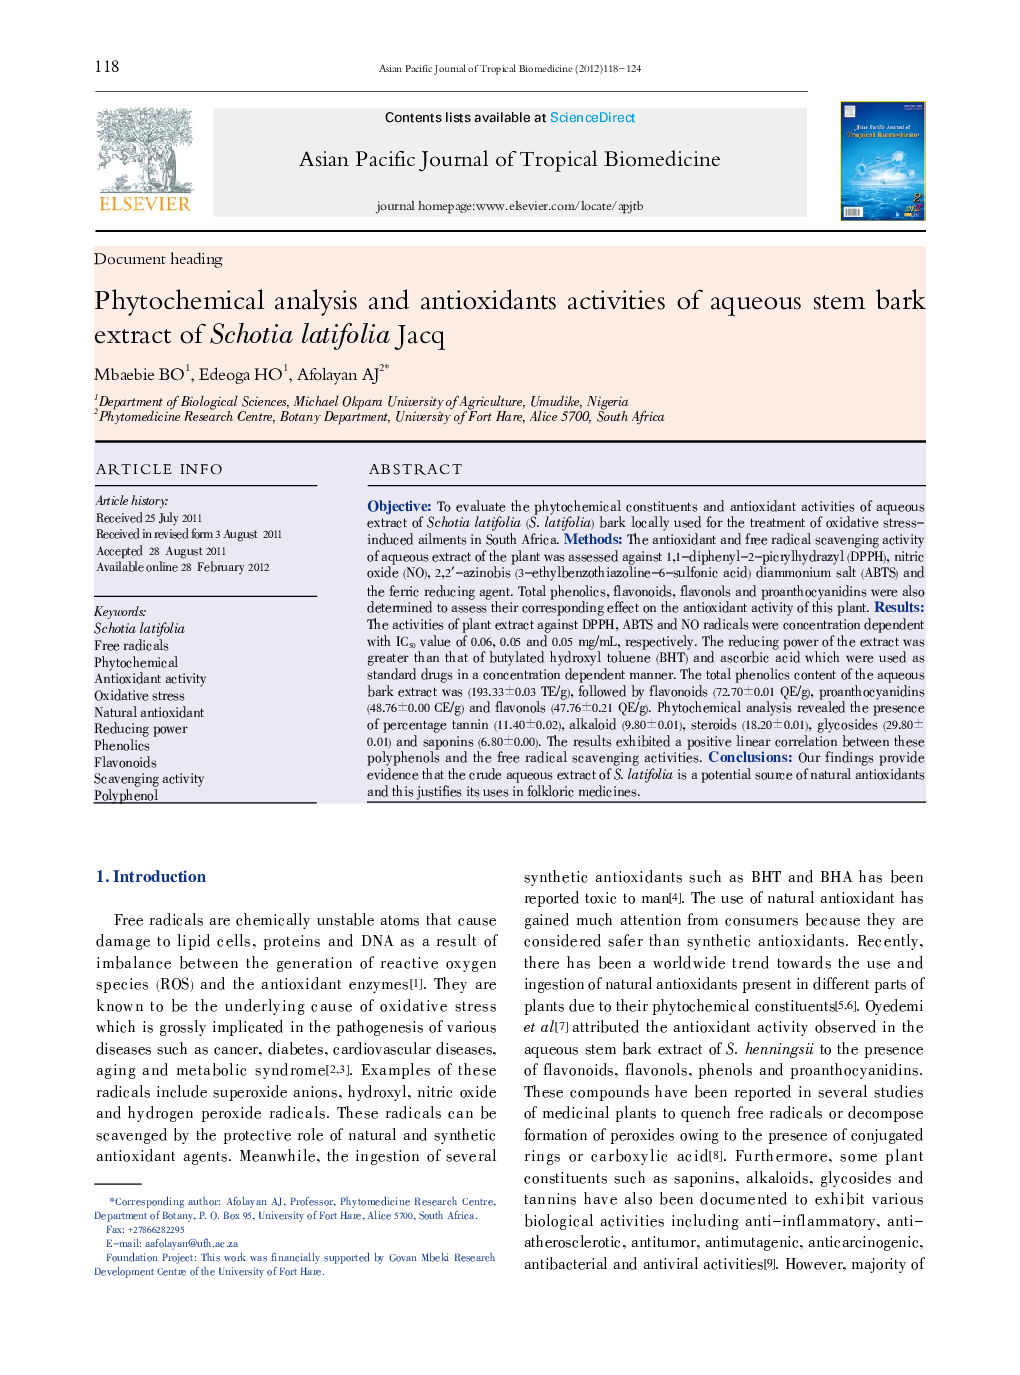 Phytochemical analysis and antioxidants activities of aqueous stem bark extract of Schotia latifolia Jacq